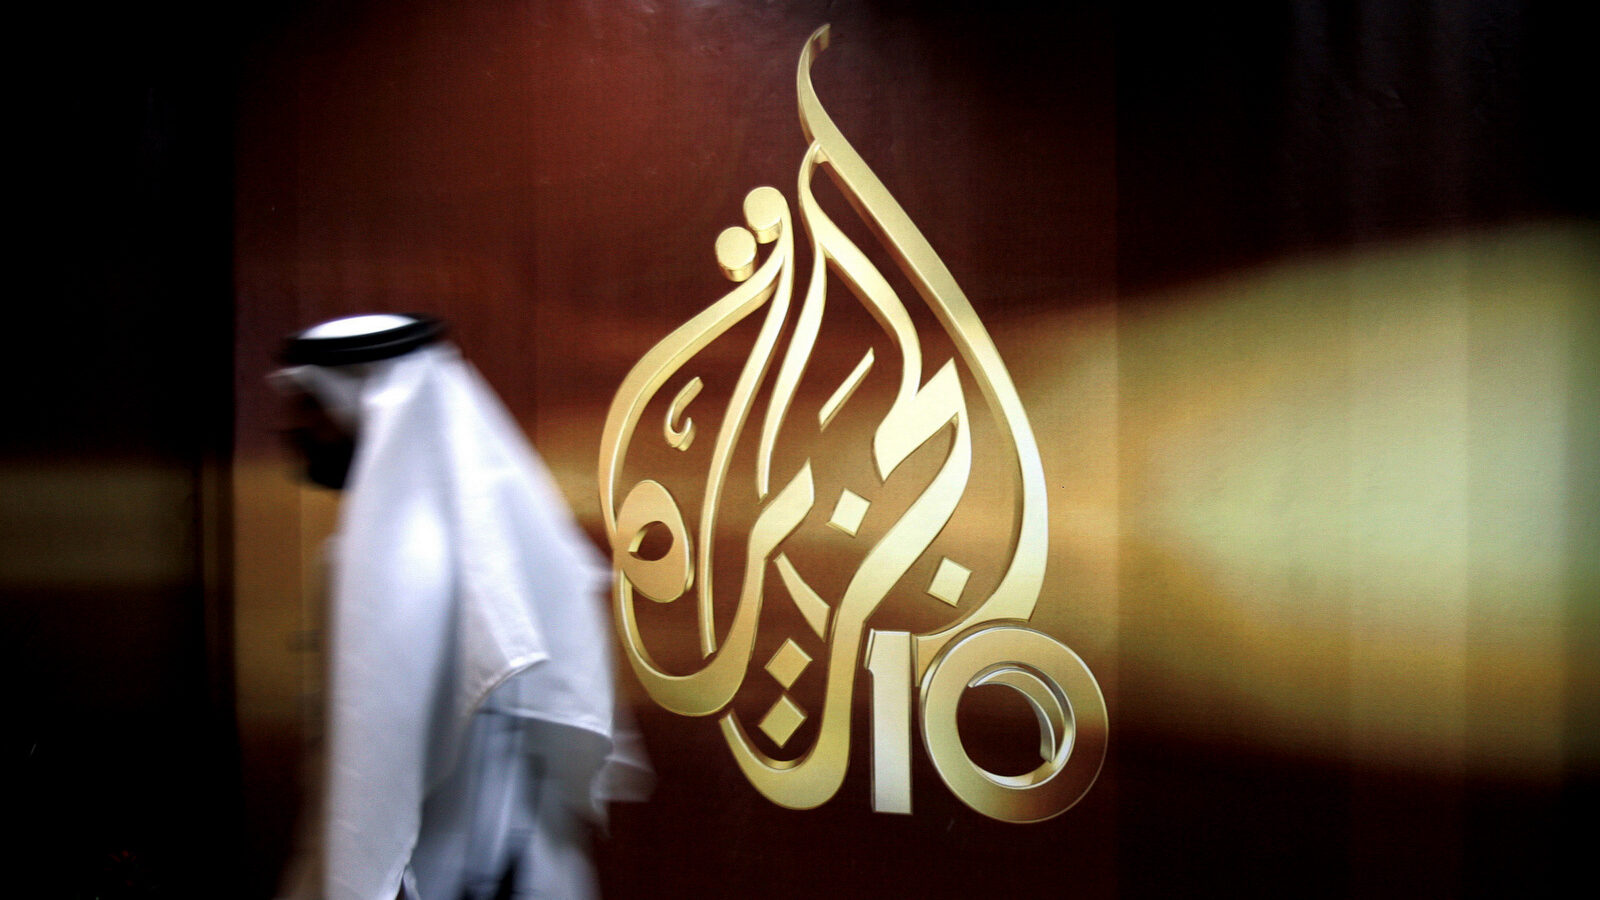 A Qatari employee of Al Jazeera Arabic language TV news channel walks past the logo of Al Jazeera in Doha, Qatar. (AP/Kamran Jebreili)